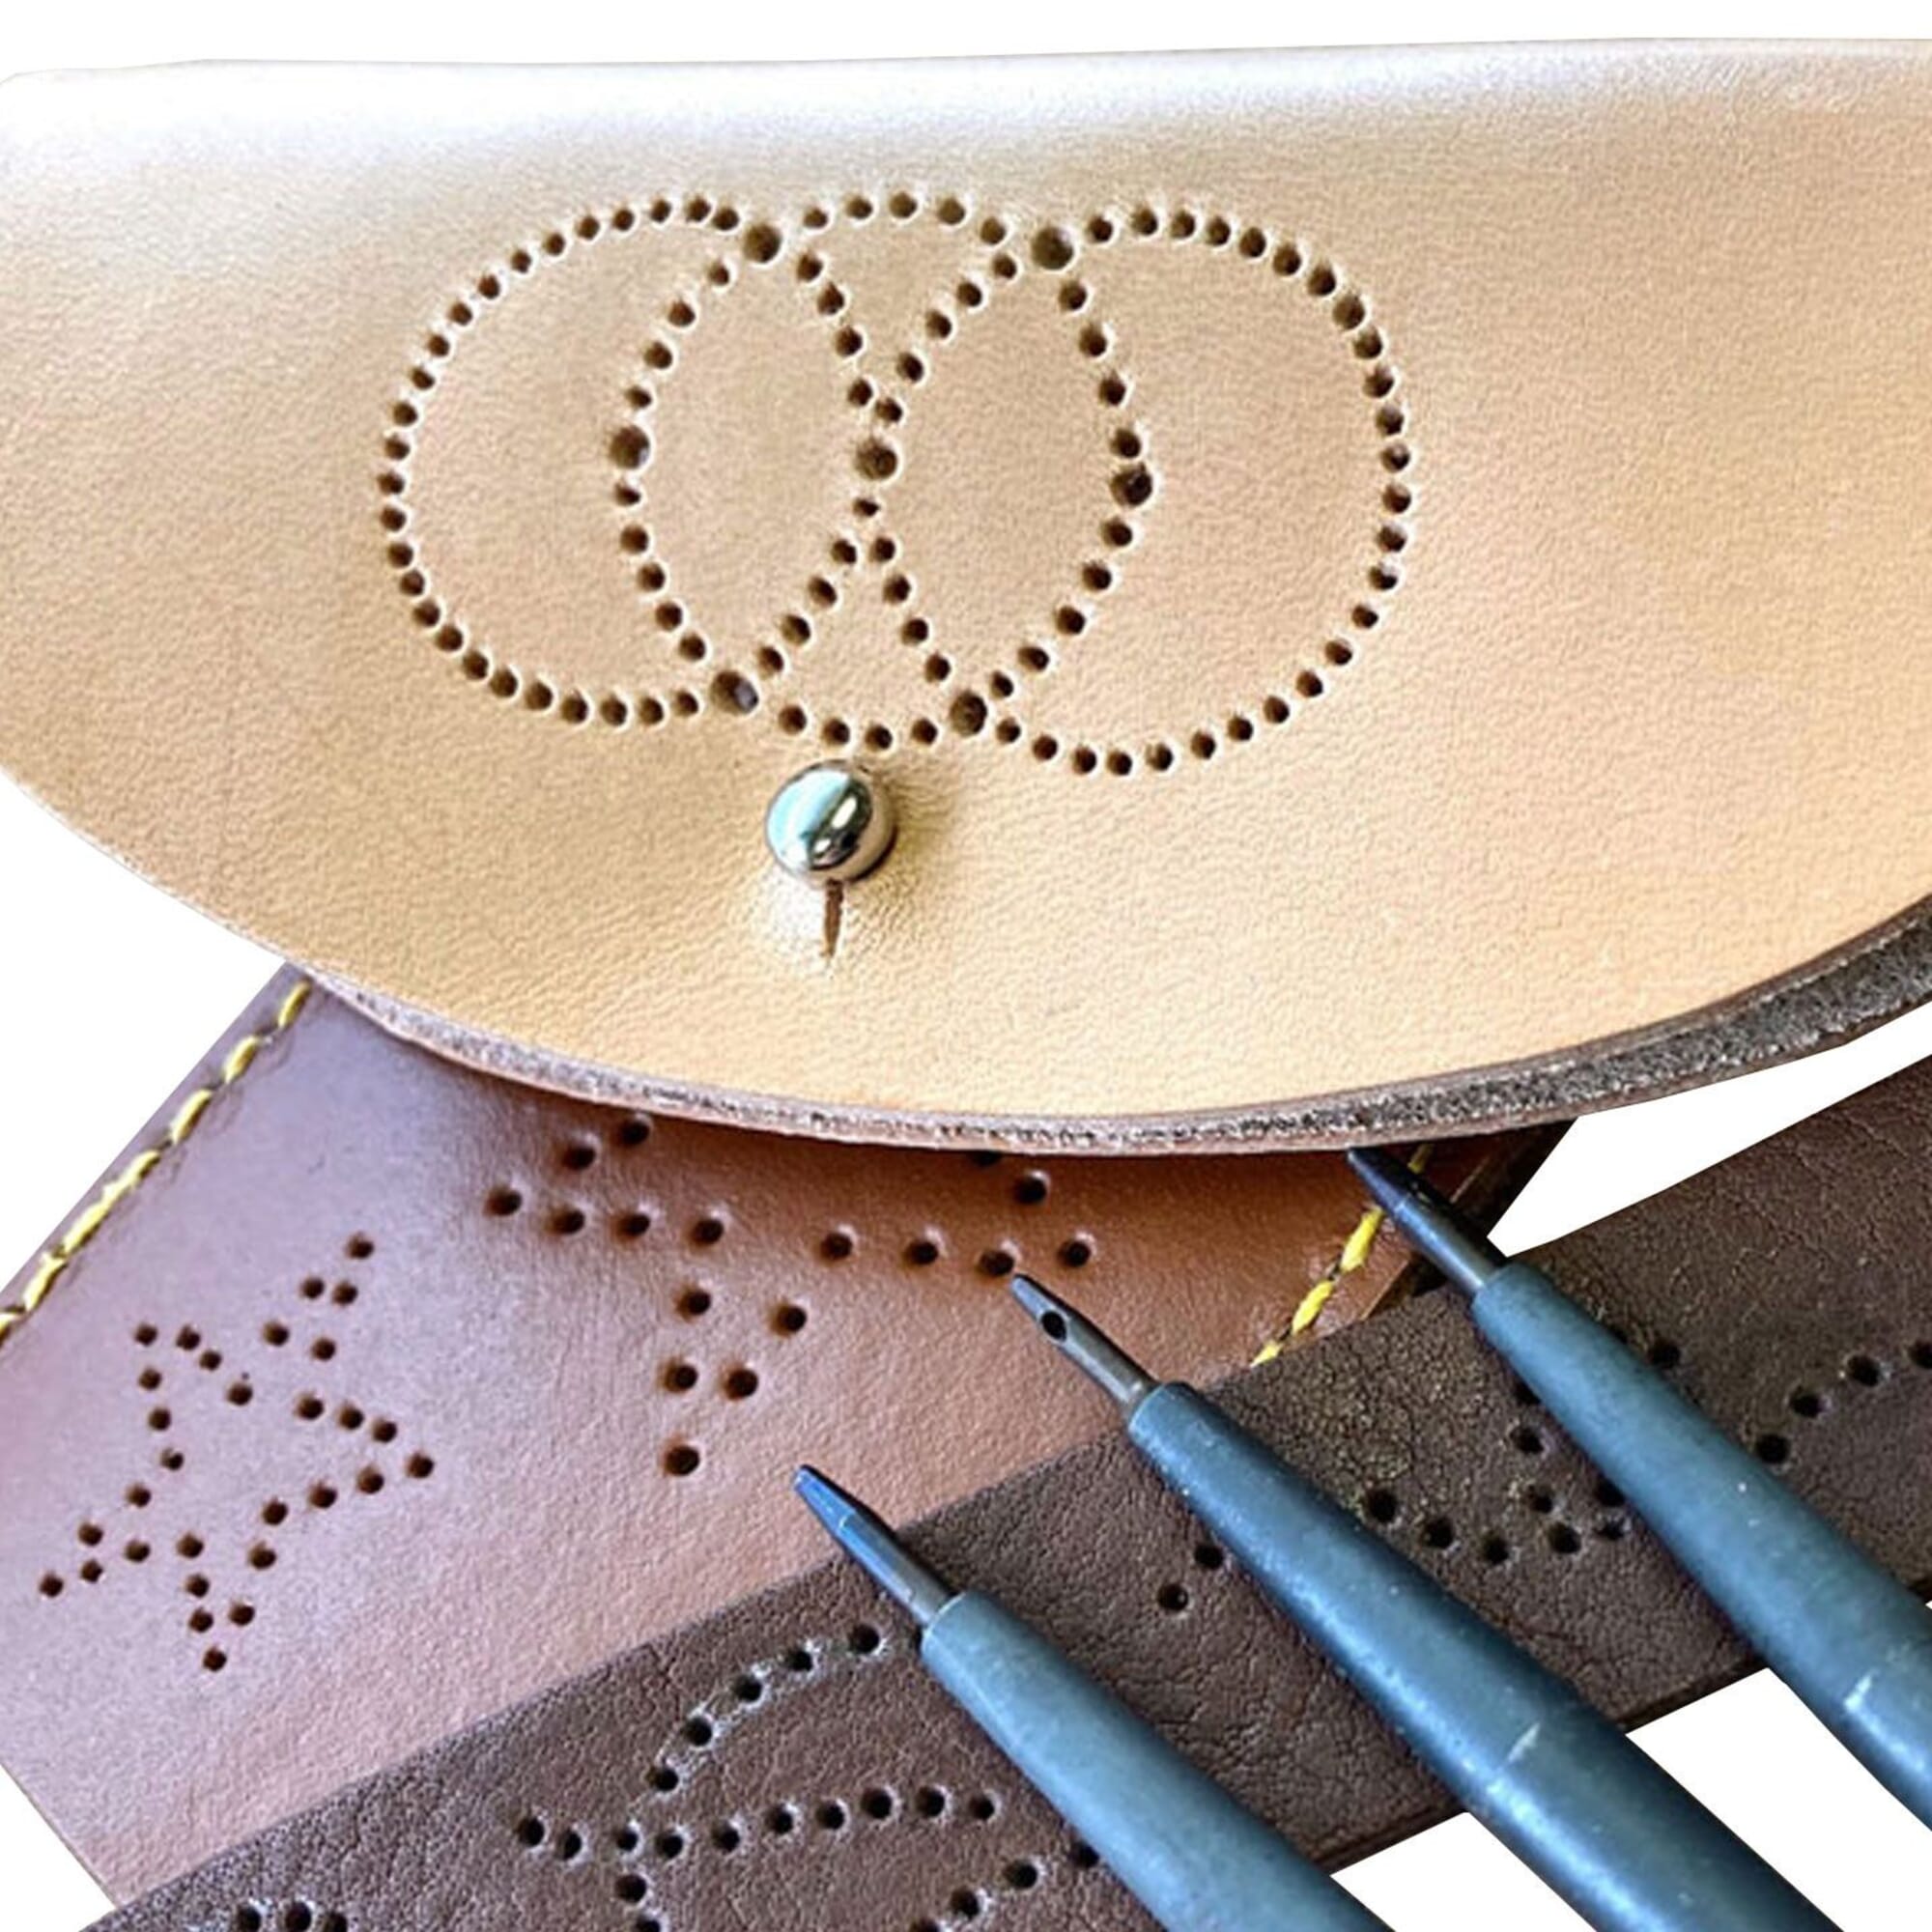 Kyoshin Elle Leathercraft Tool Custom Shaped Leather Hole Punch No.5 Large  Heart 9mm x 9mm, to Pierce Decorative Patterns in Leatherwork